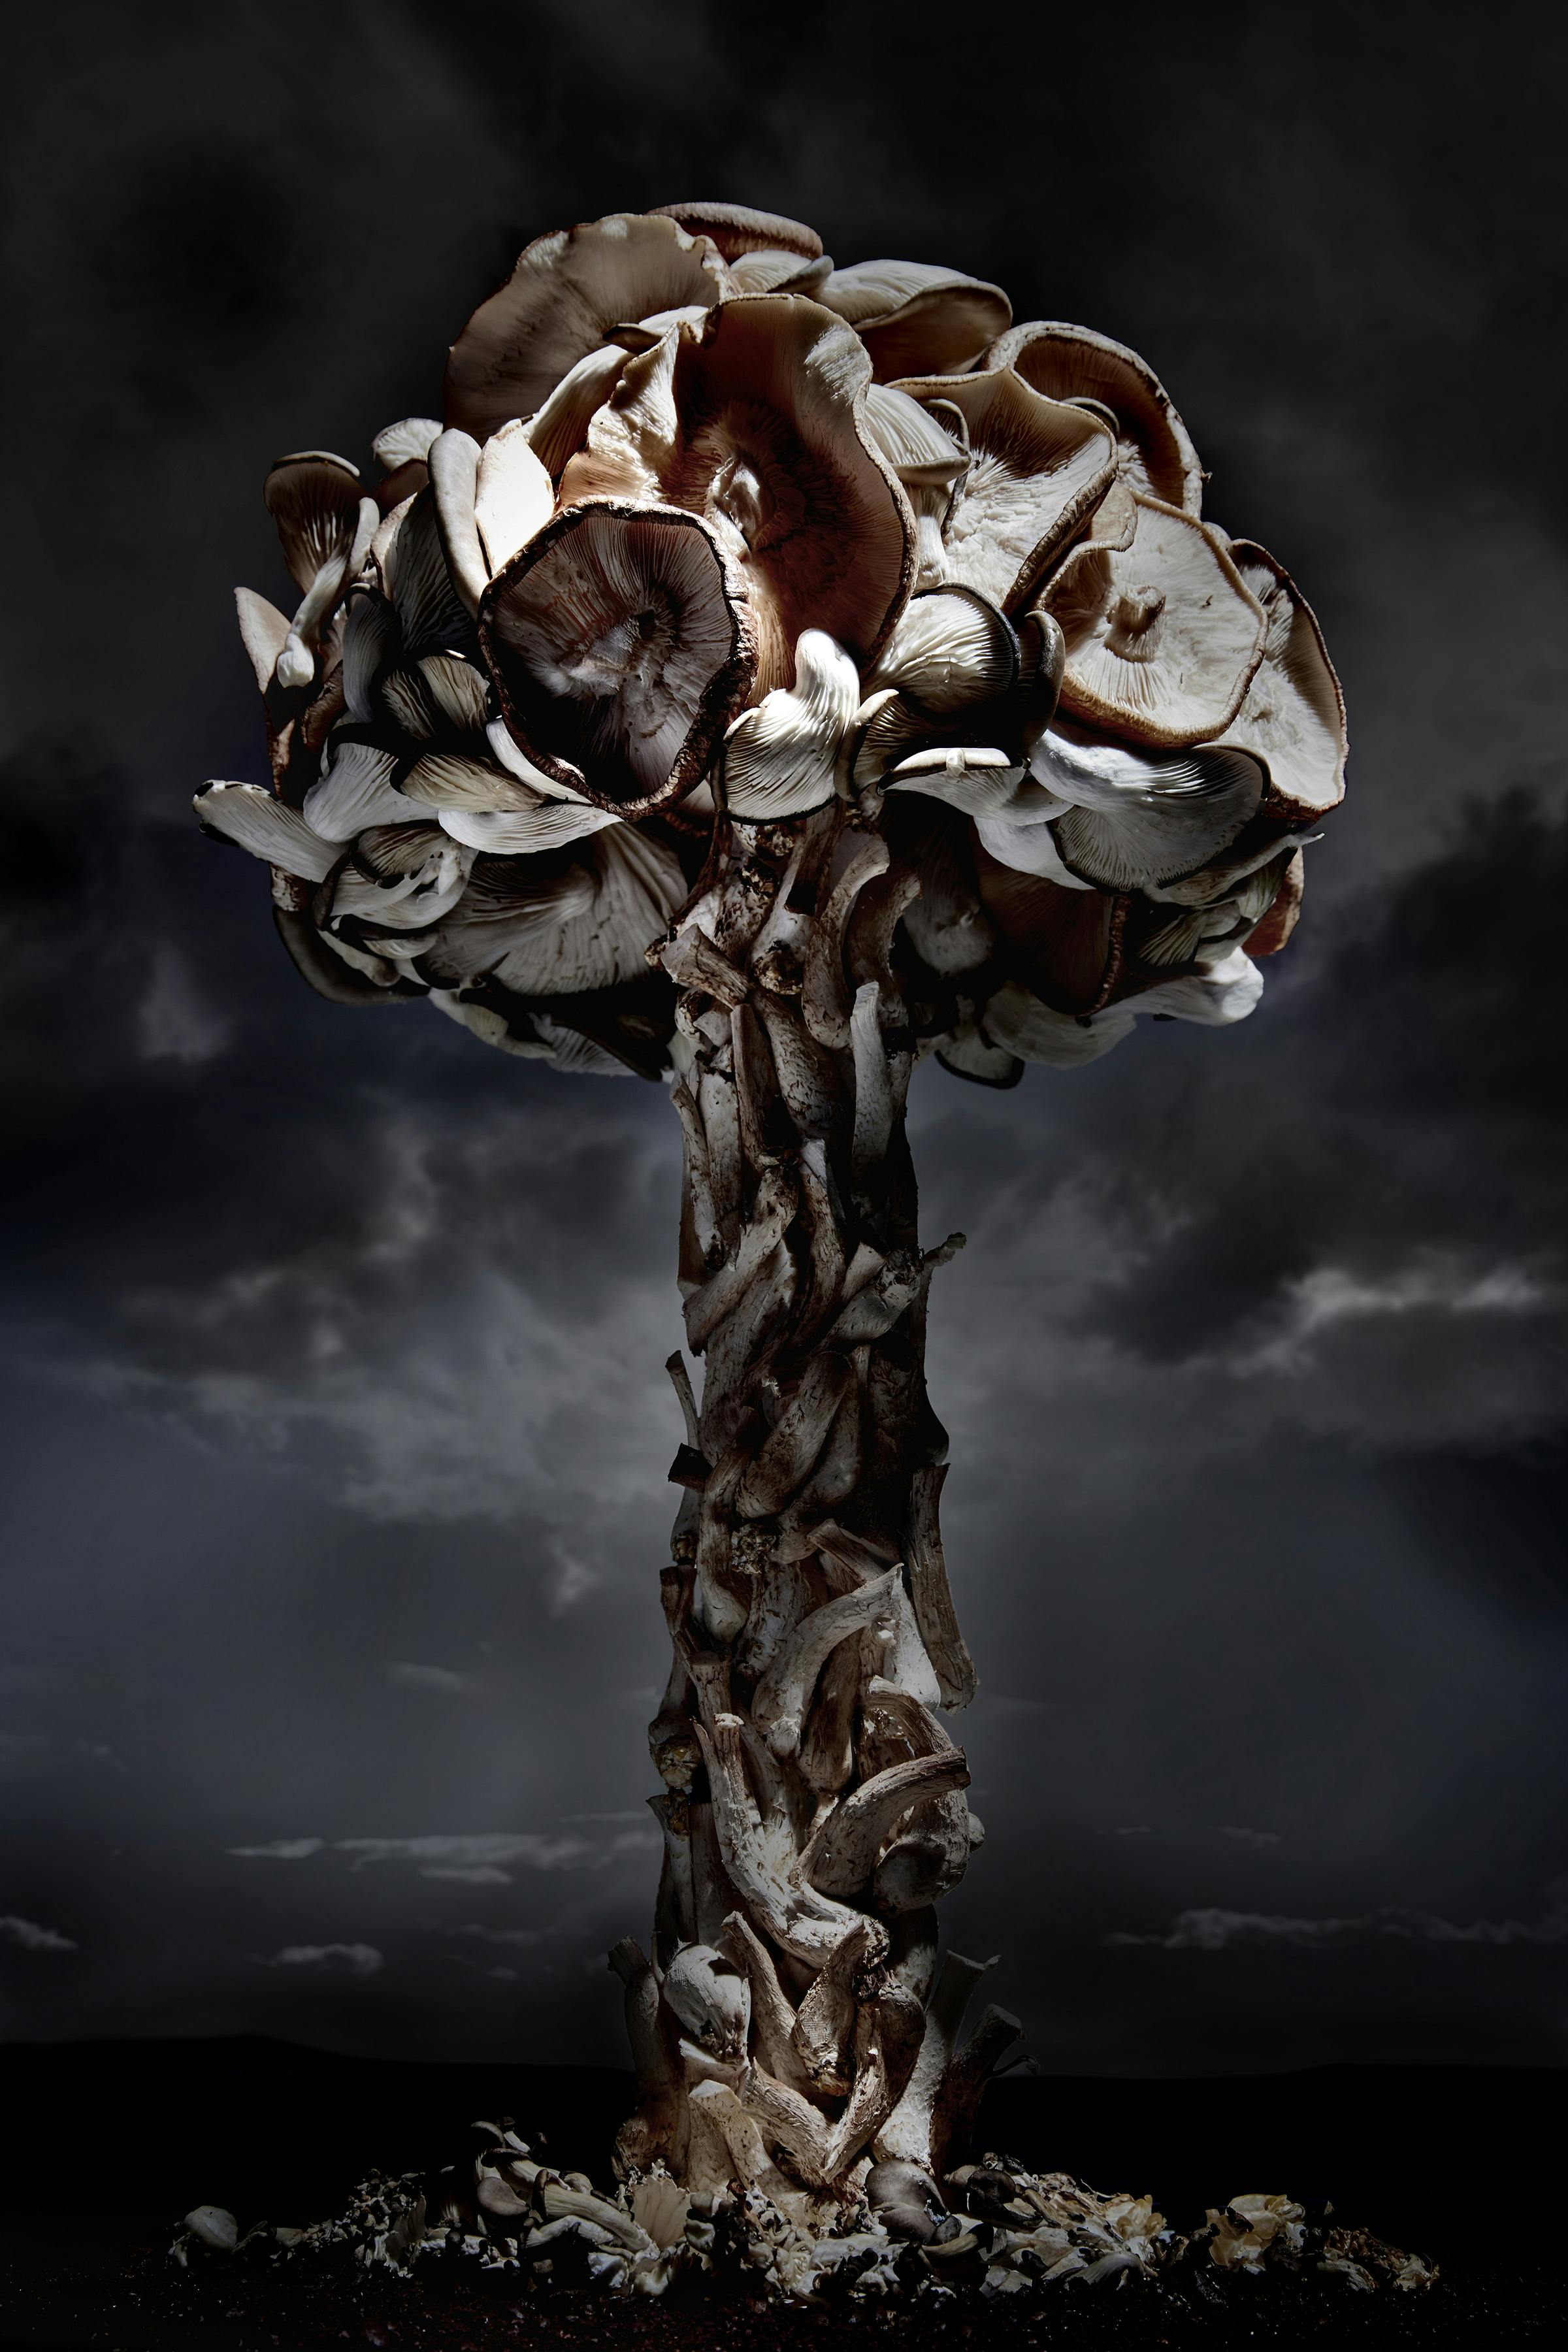 A mushroom cloud made of mushrooms